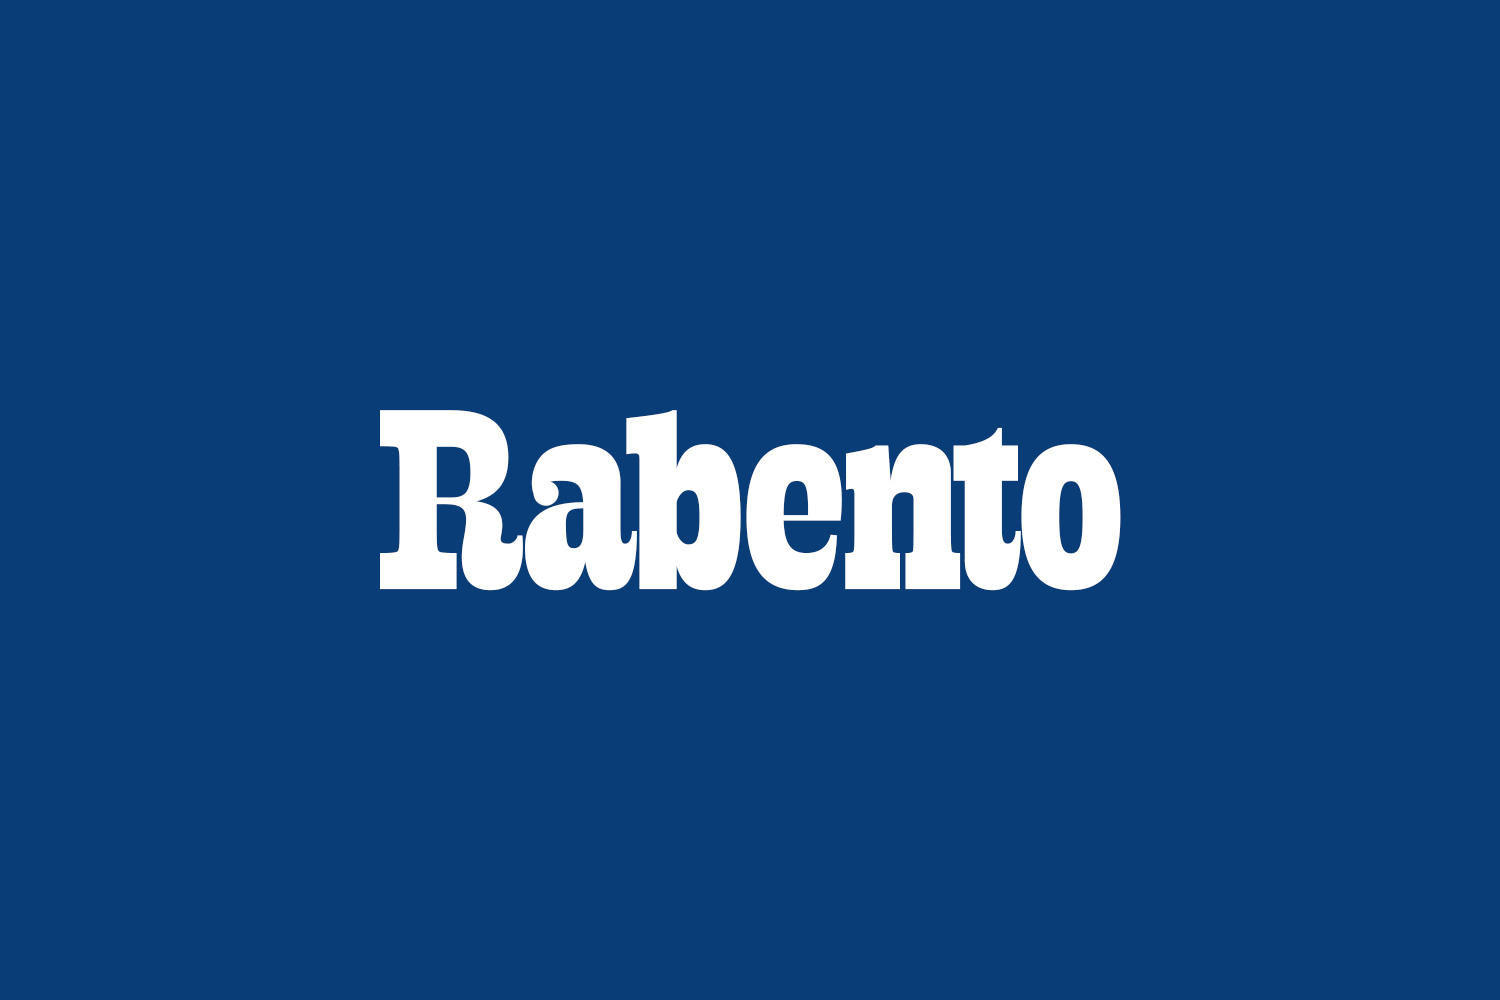 Rabento Free Font